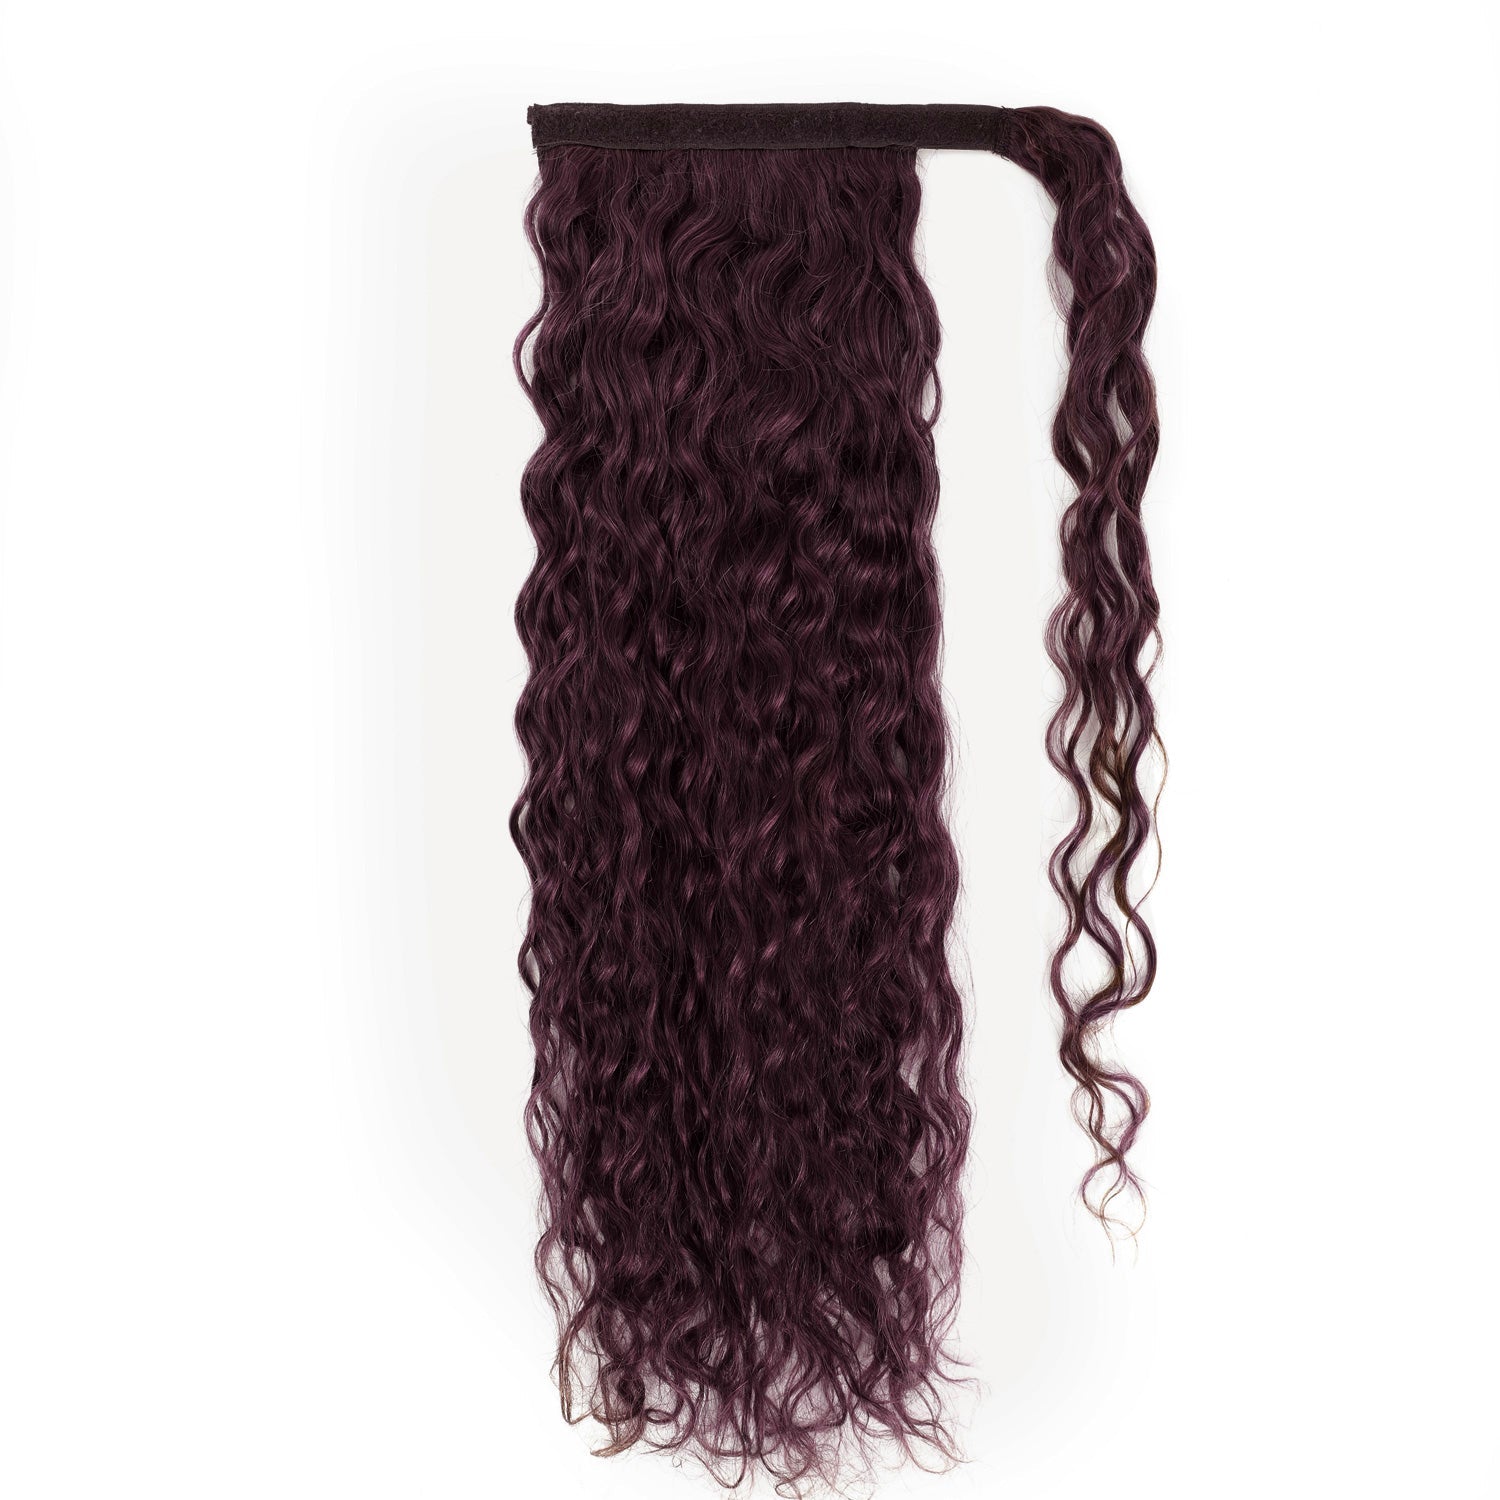 Curly Ponytail Hair Extensions #99j Burgundy